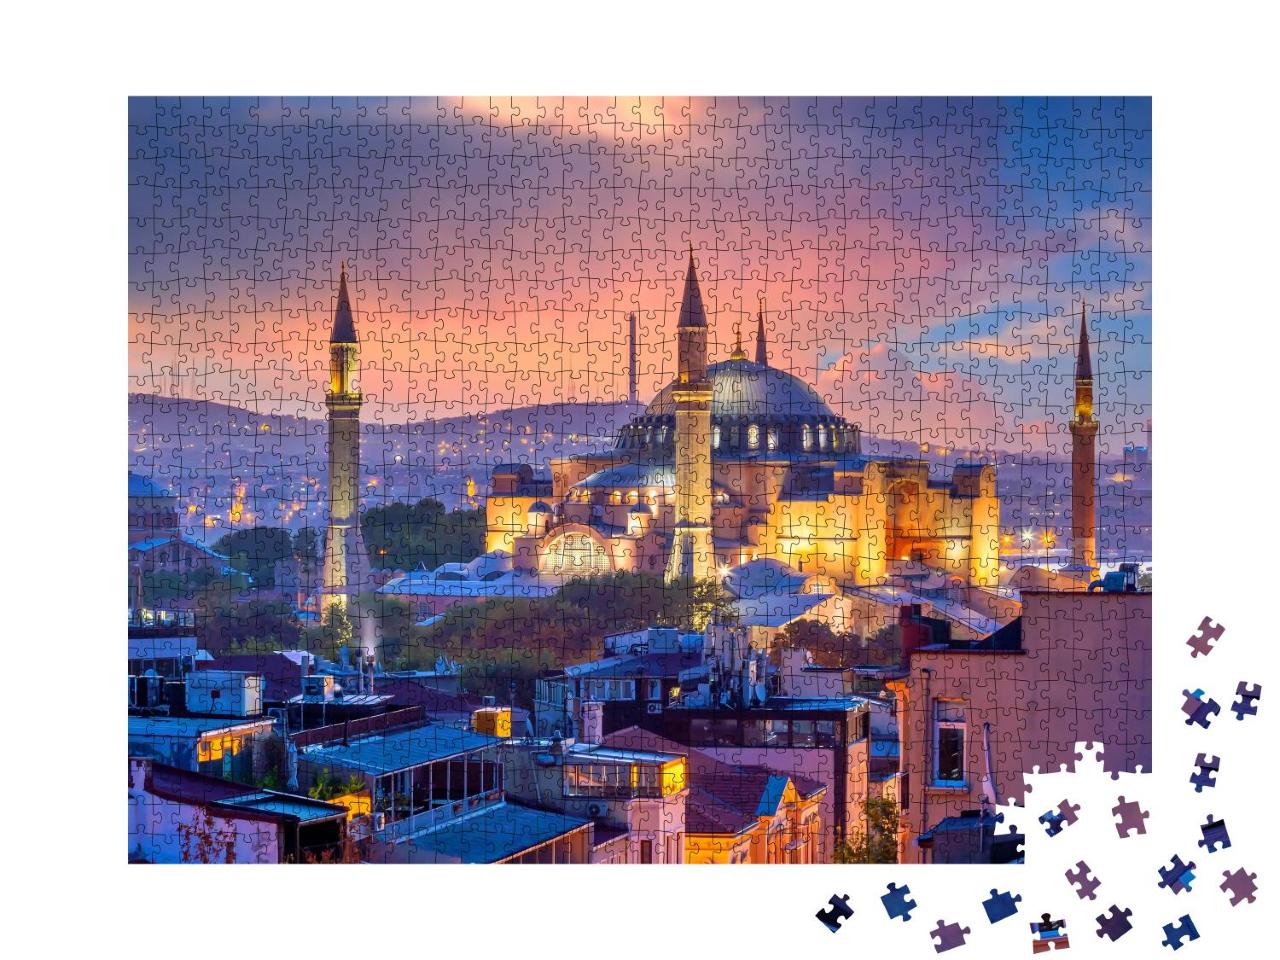 Puzzle 1000 Teile „Verzauberter Sonnenuntergang: Schöner Blick auf die Hagia Sophia in Istanbul, Türkei“